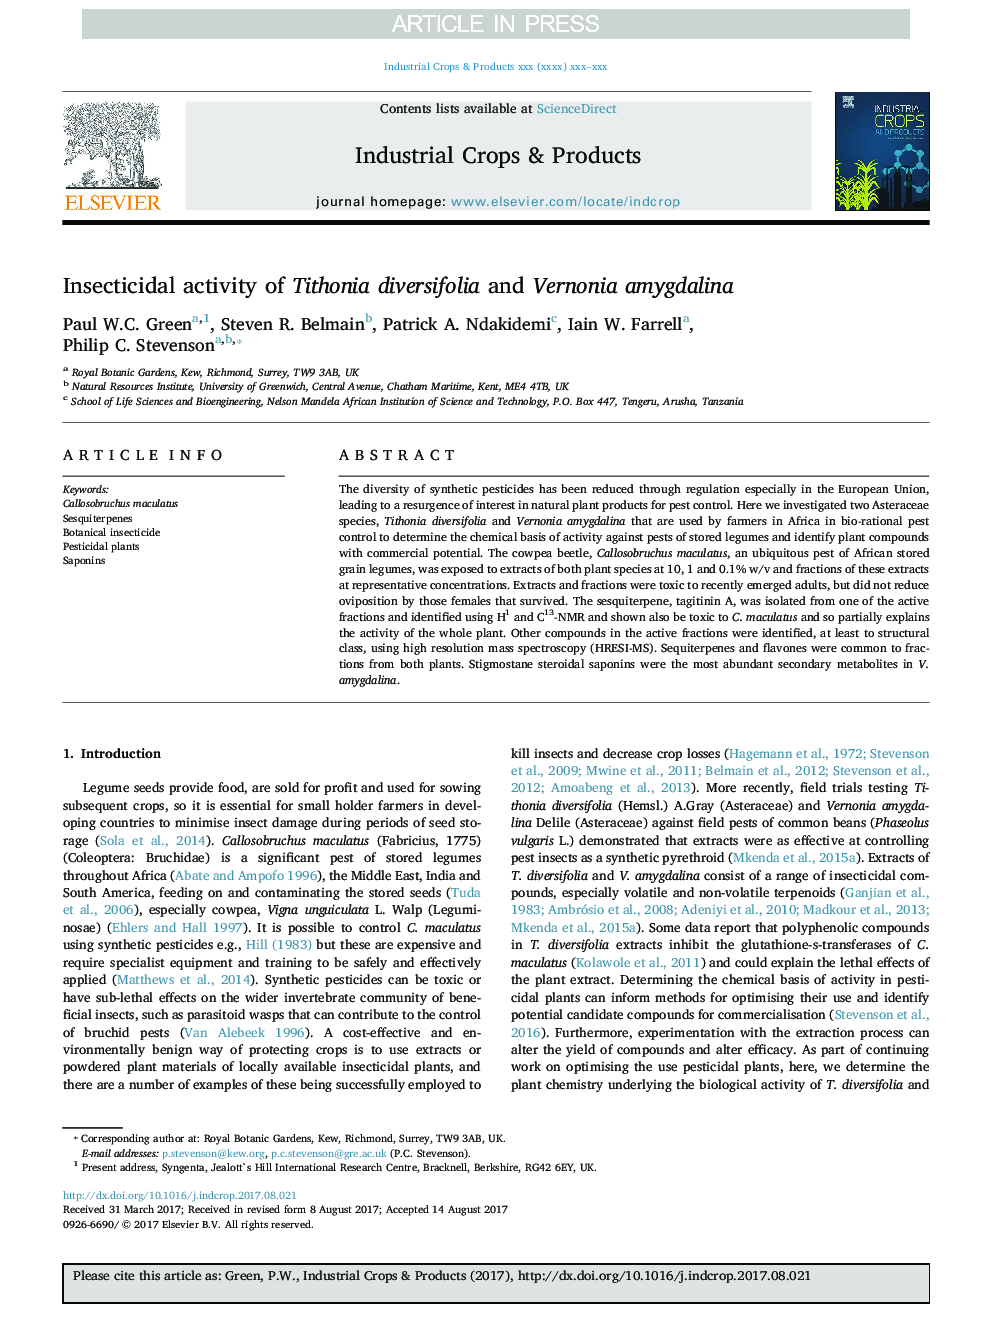 Insecticidal activity of Tithonia diversifolia and Vernonia amygdalina